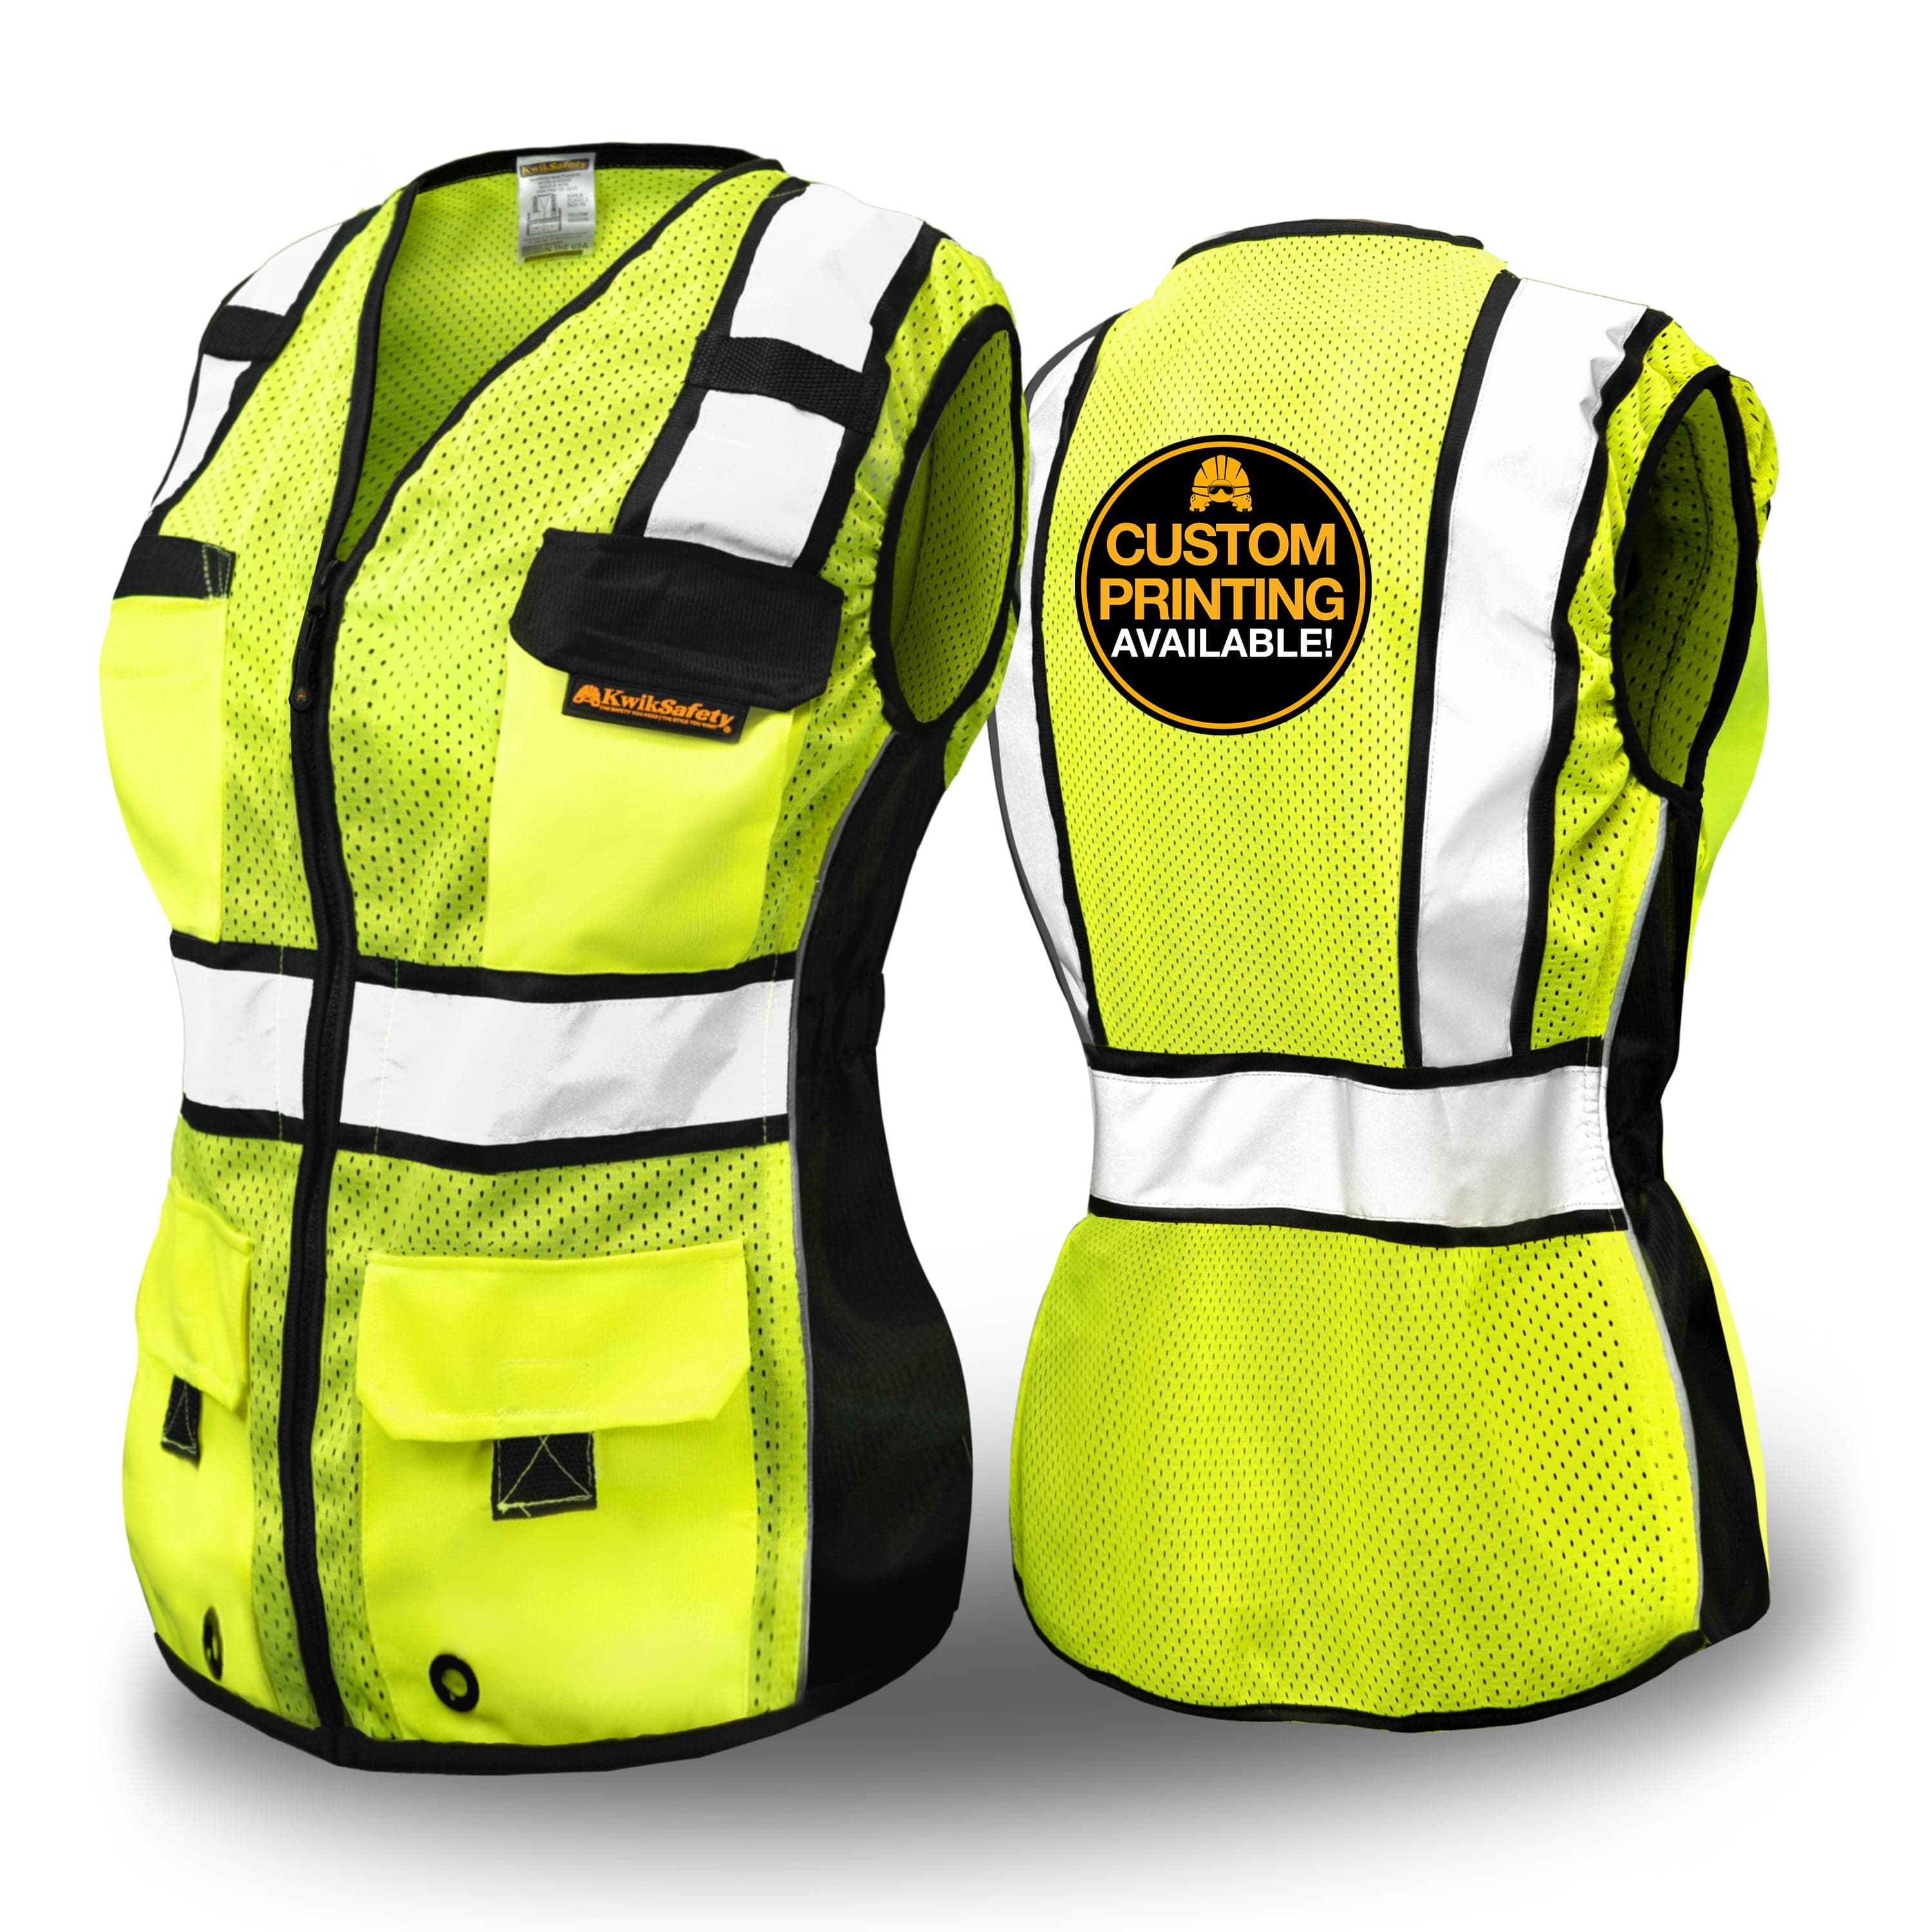 KwikSafety FIRST LADY Safety Vest for Women (SNUG-FIT) Class 2 ANSI Tested  OSHA Compliant Hi Vis Reflective PPE Surveyor - Model No.: KS3319